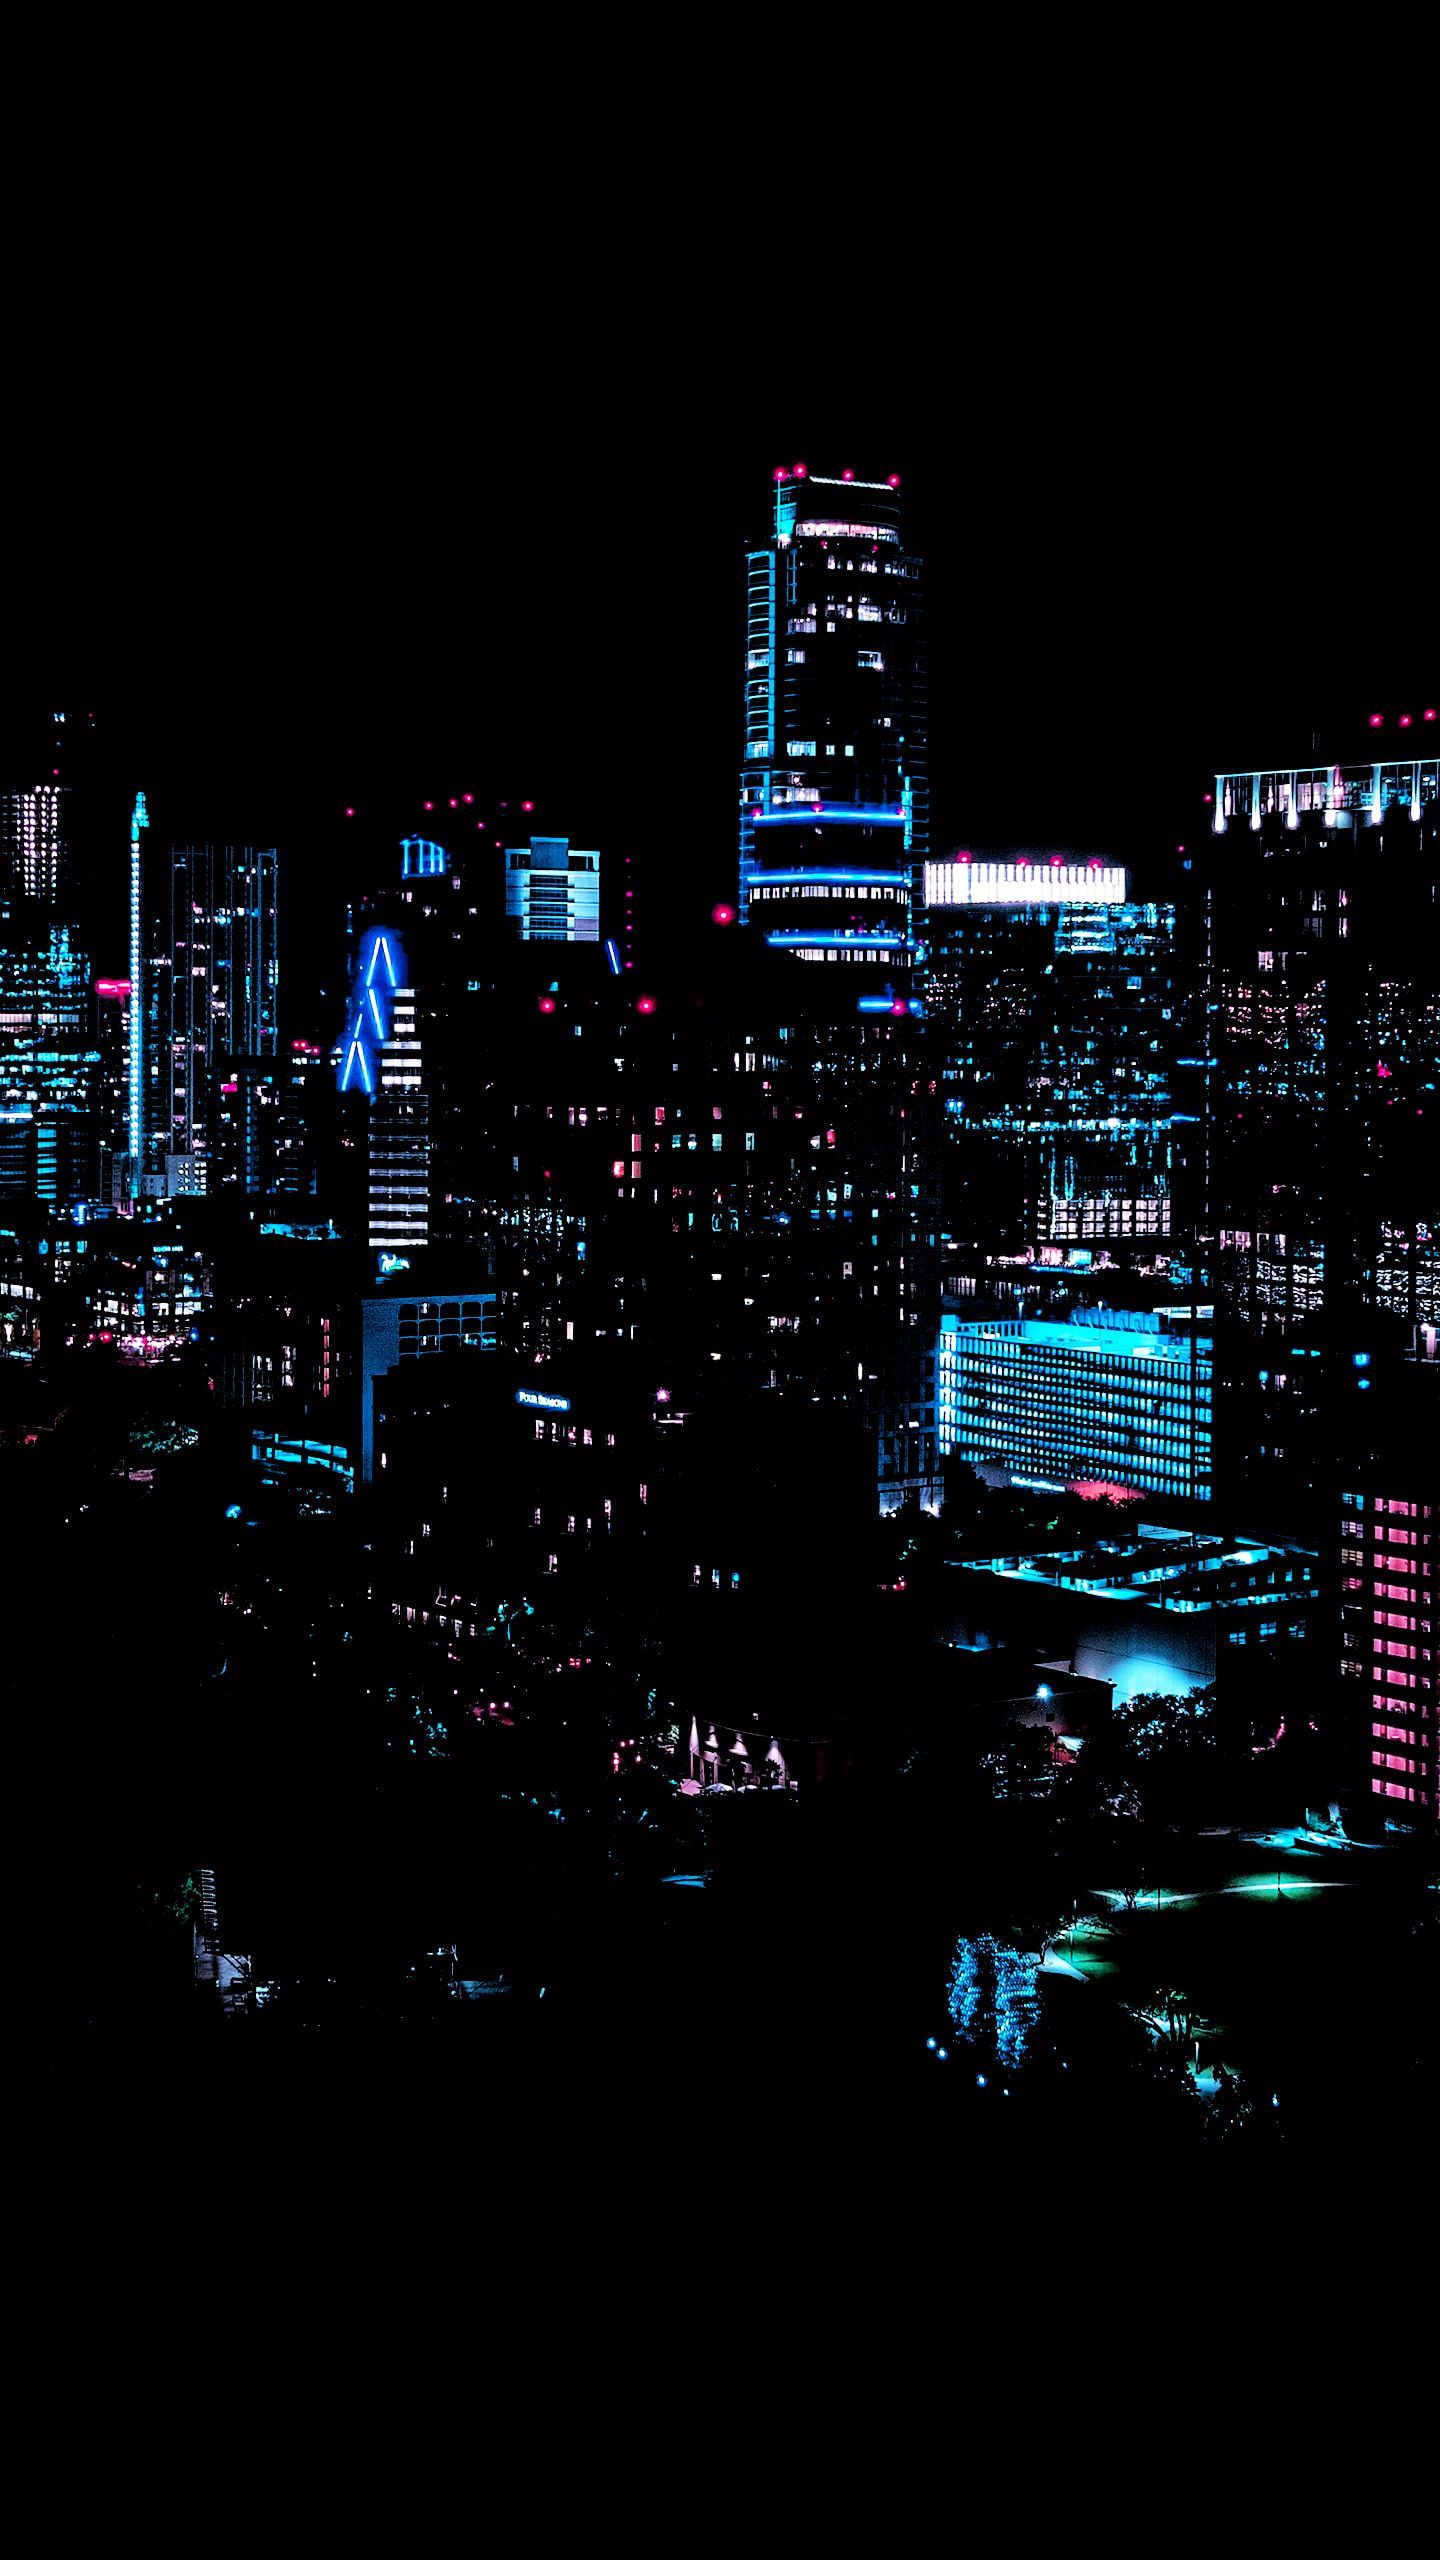 city #night #dark #building #lights #blue city lights #vertical portrait display #black K #wallpape. City lights wallpaper, Cityscape wallpaper, City wallpaper